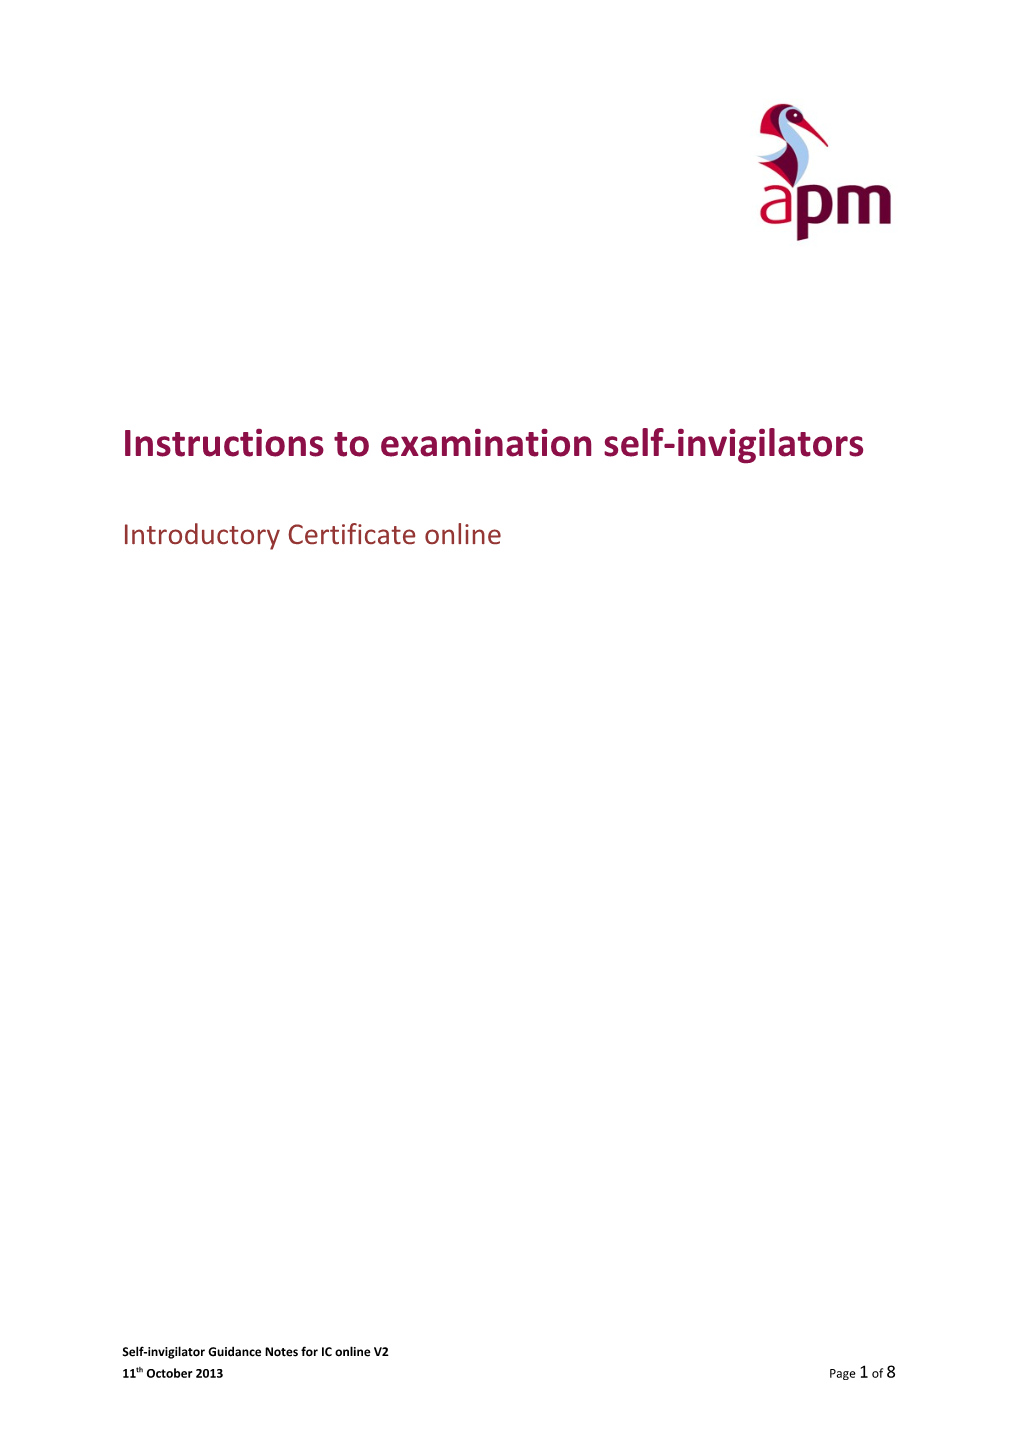 Instructions to Examination Self-Invigilators